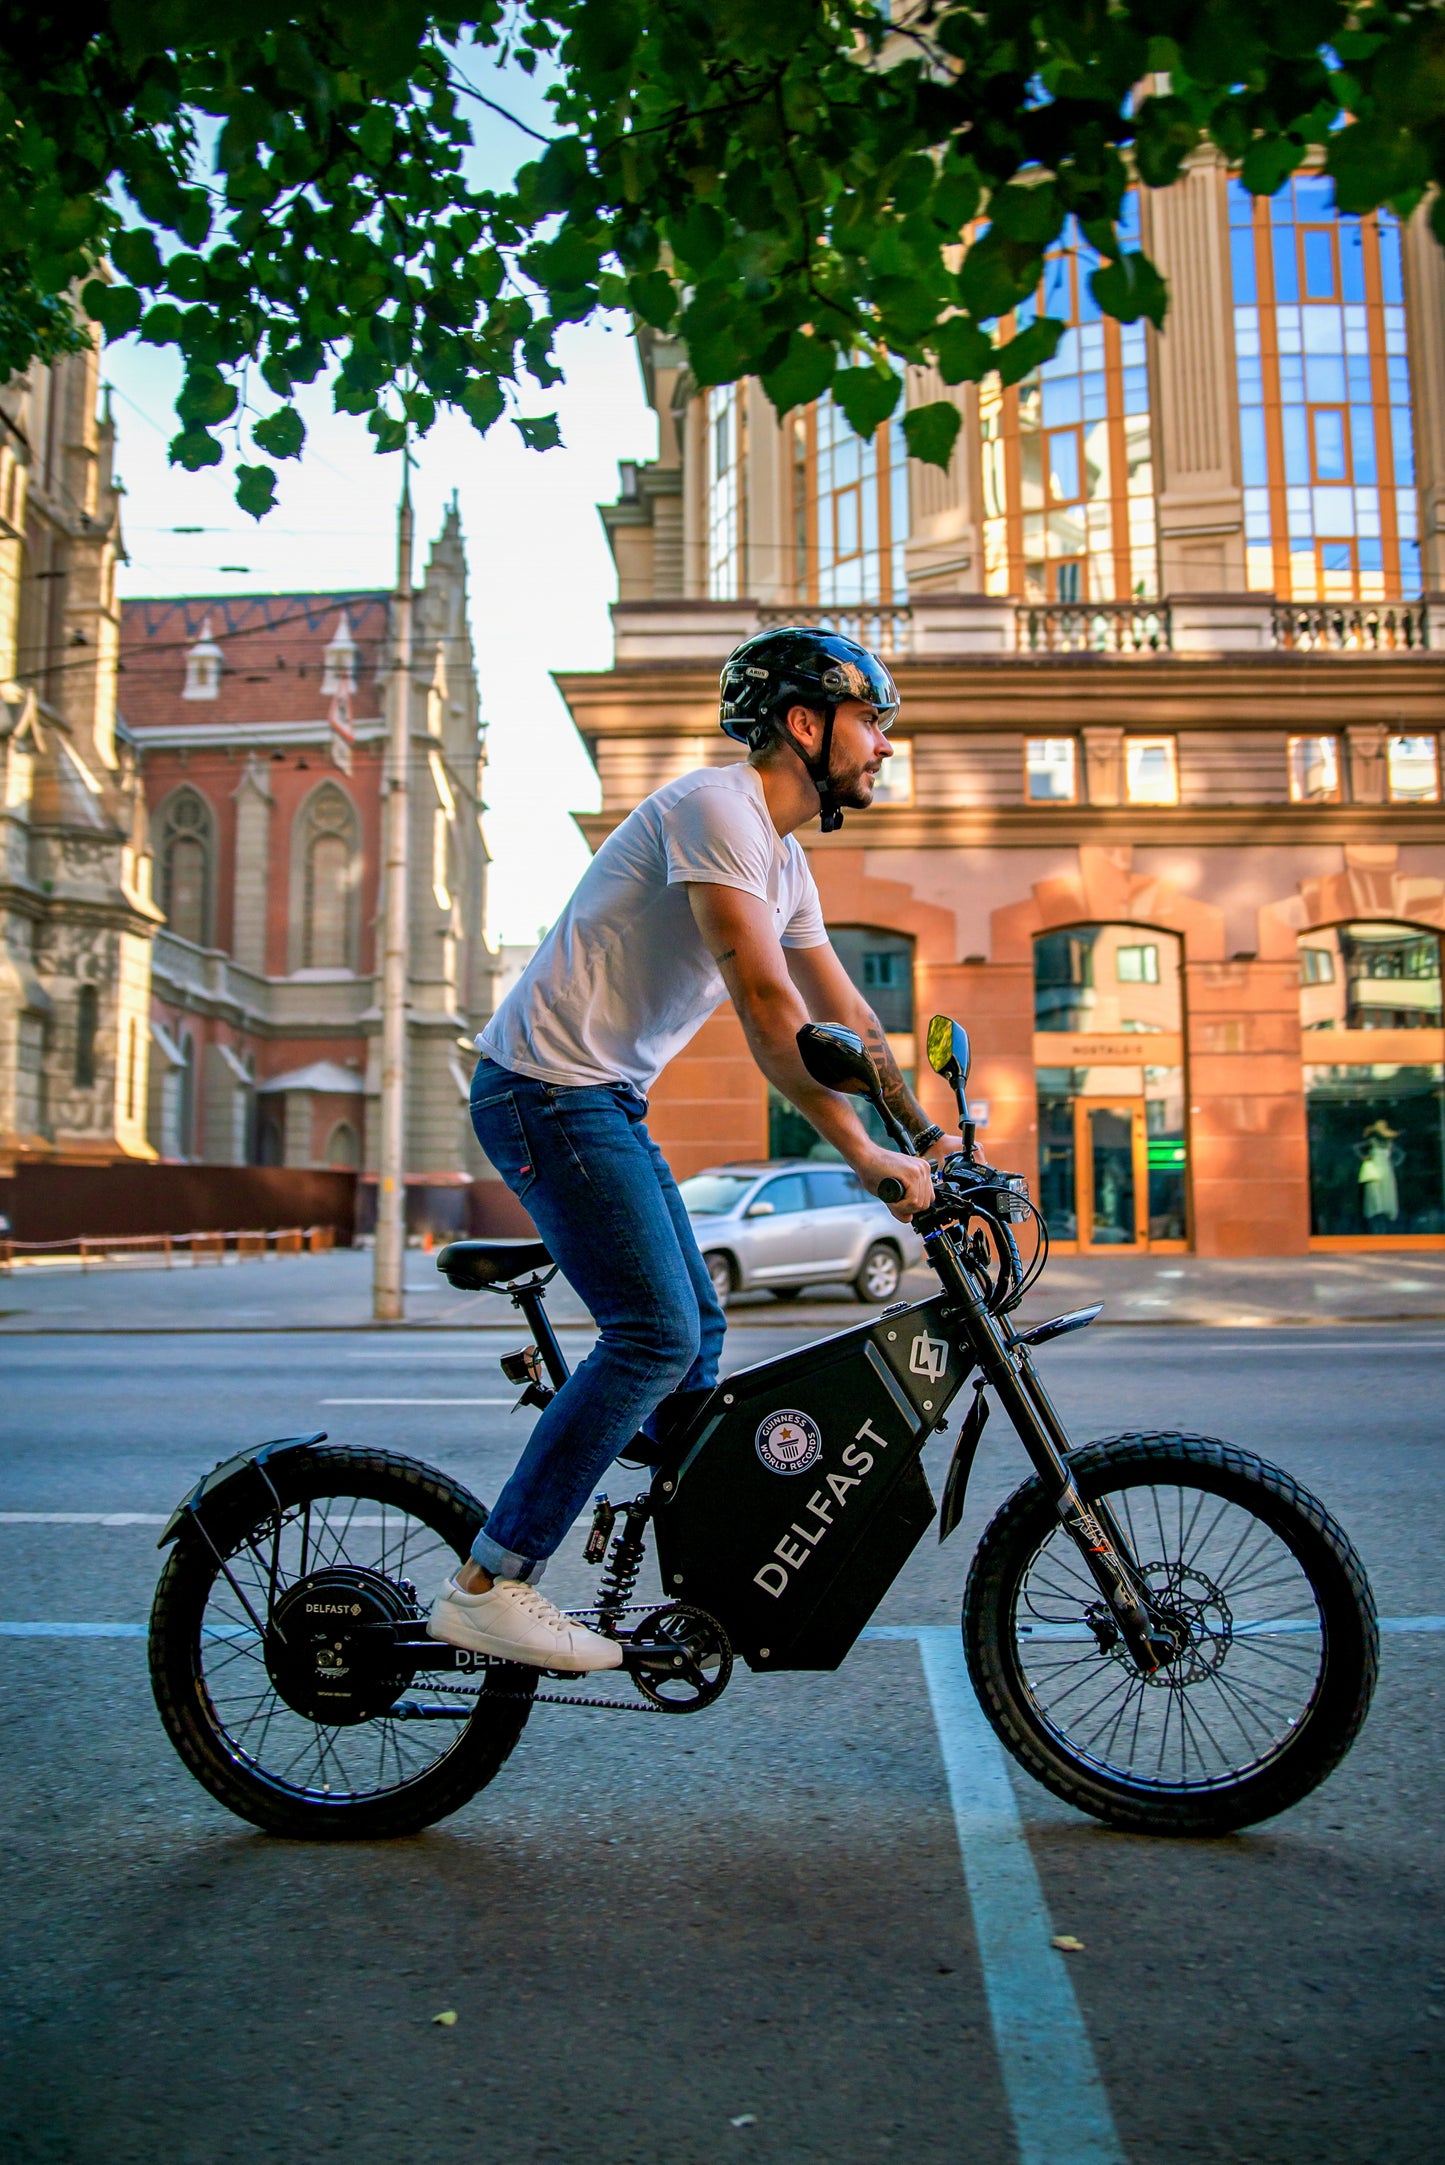 Electric bike Delfast Top | Delfast Bike | TOP 3.0 Electric Bike | Electric Bike | Delfast TOP 3.0 | offroad bike | city electric bike | bike for Offroad Trips | City ebike | Bike Lover USA